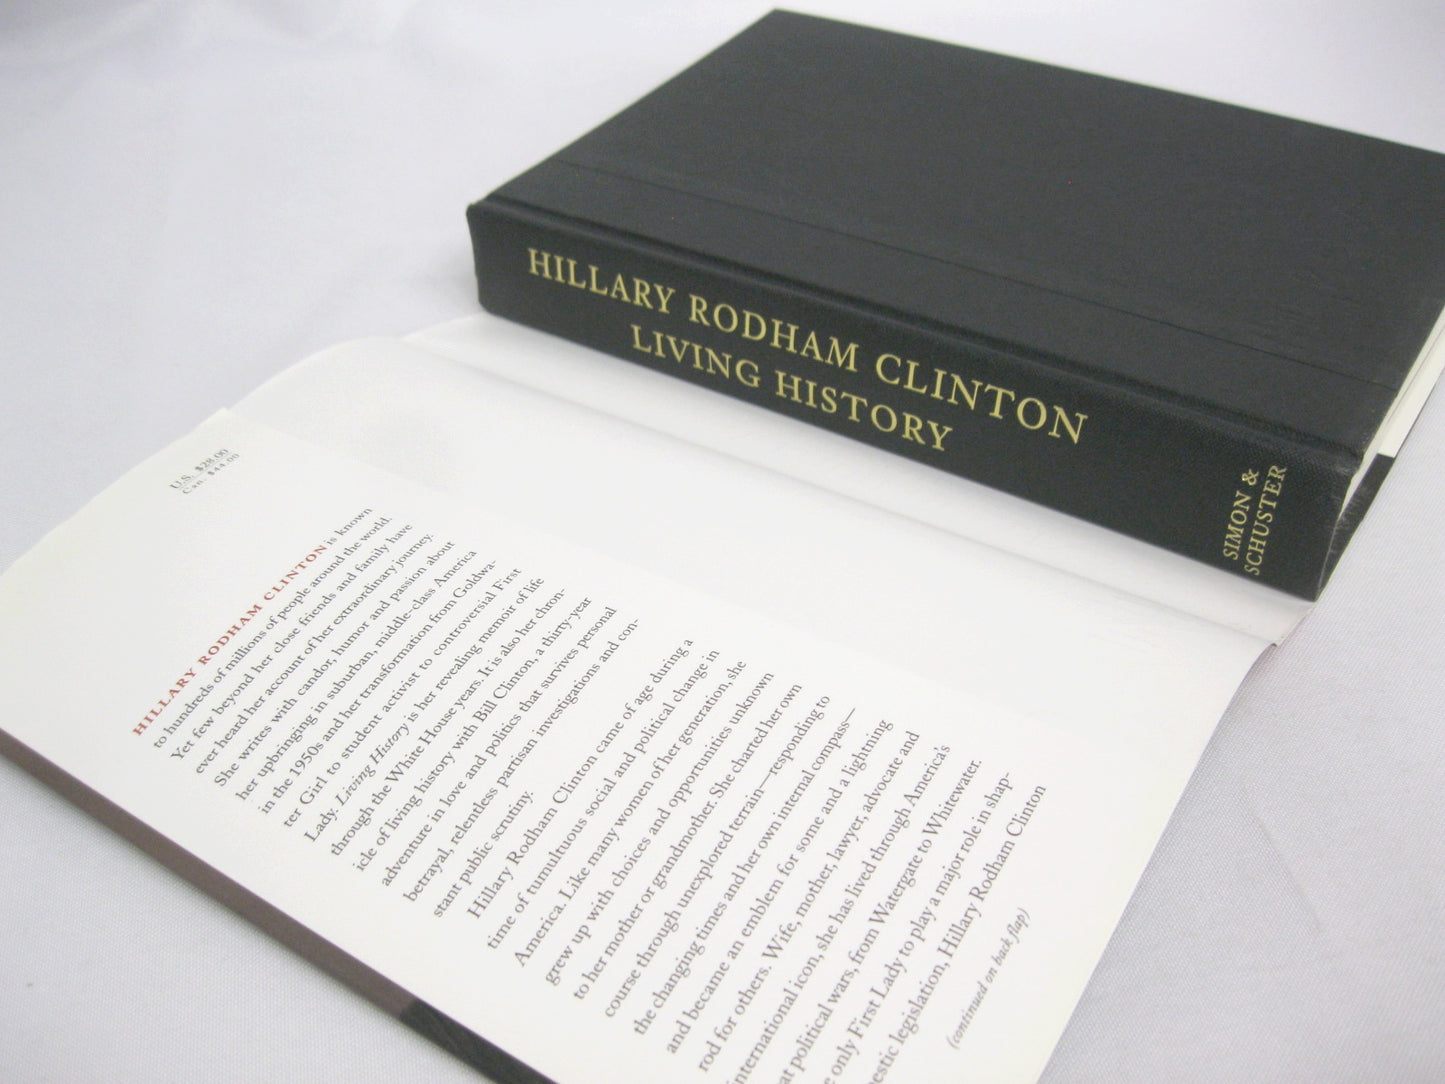 Living History by Hillary Rodham Clinton